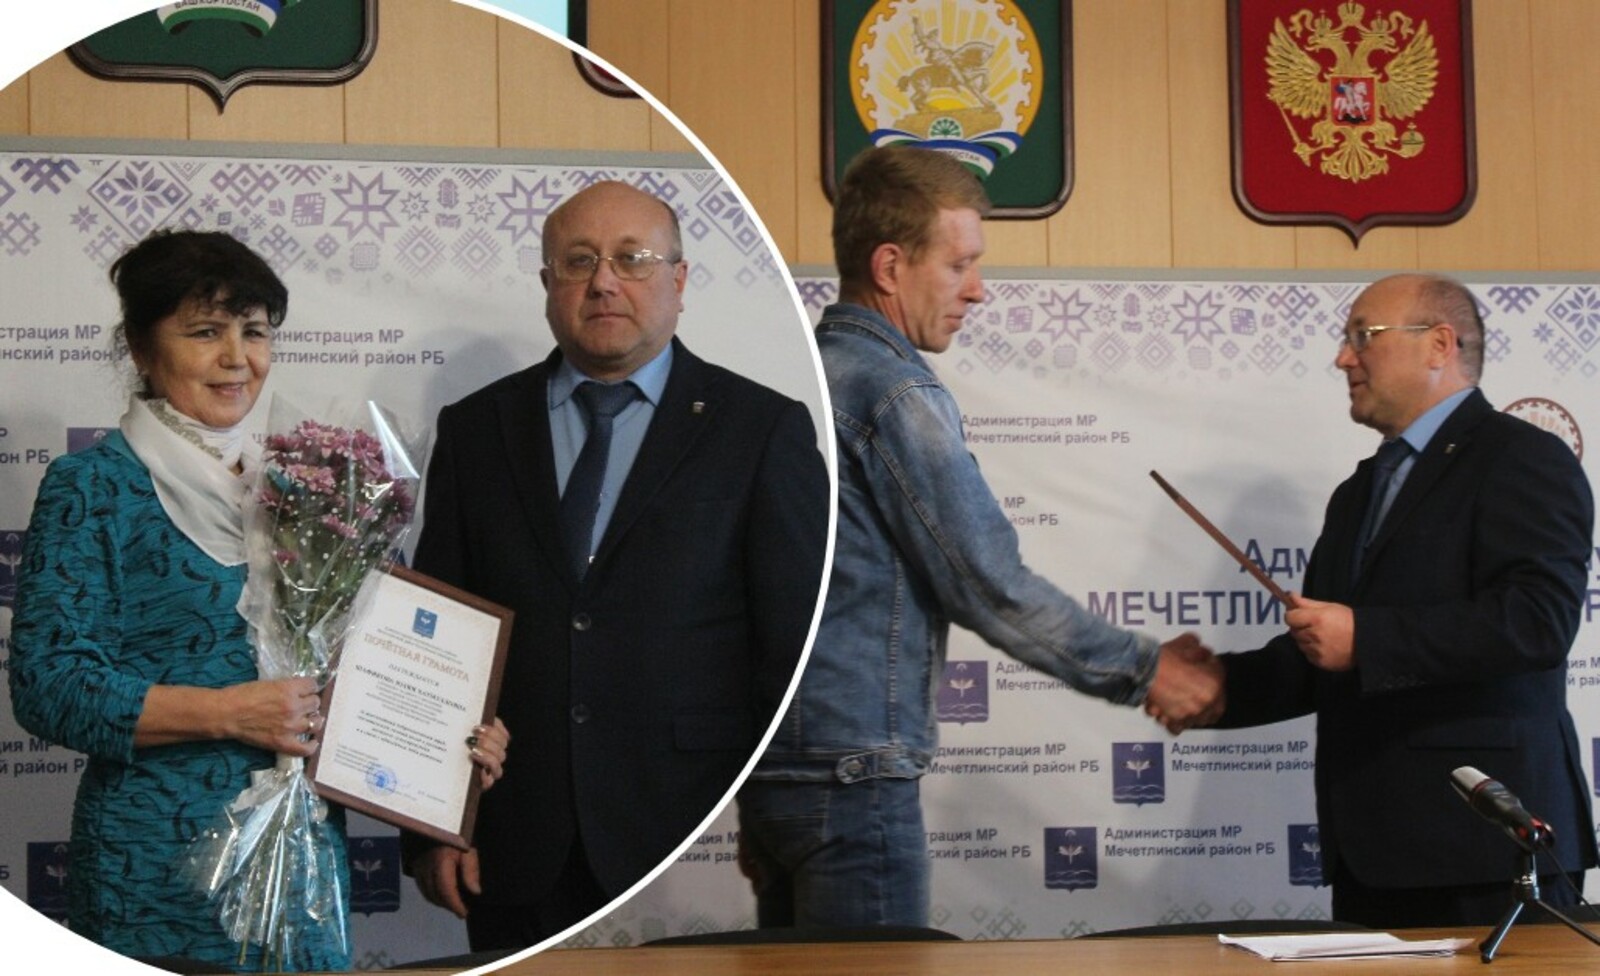 Мечетлинцы получили награды